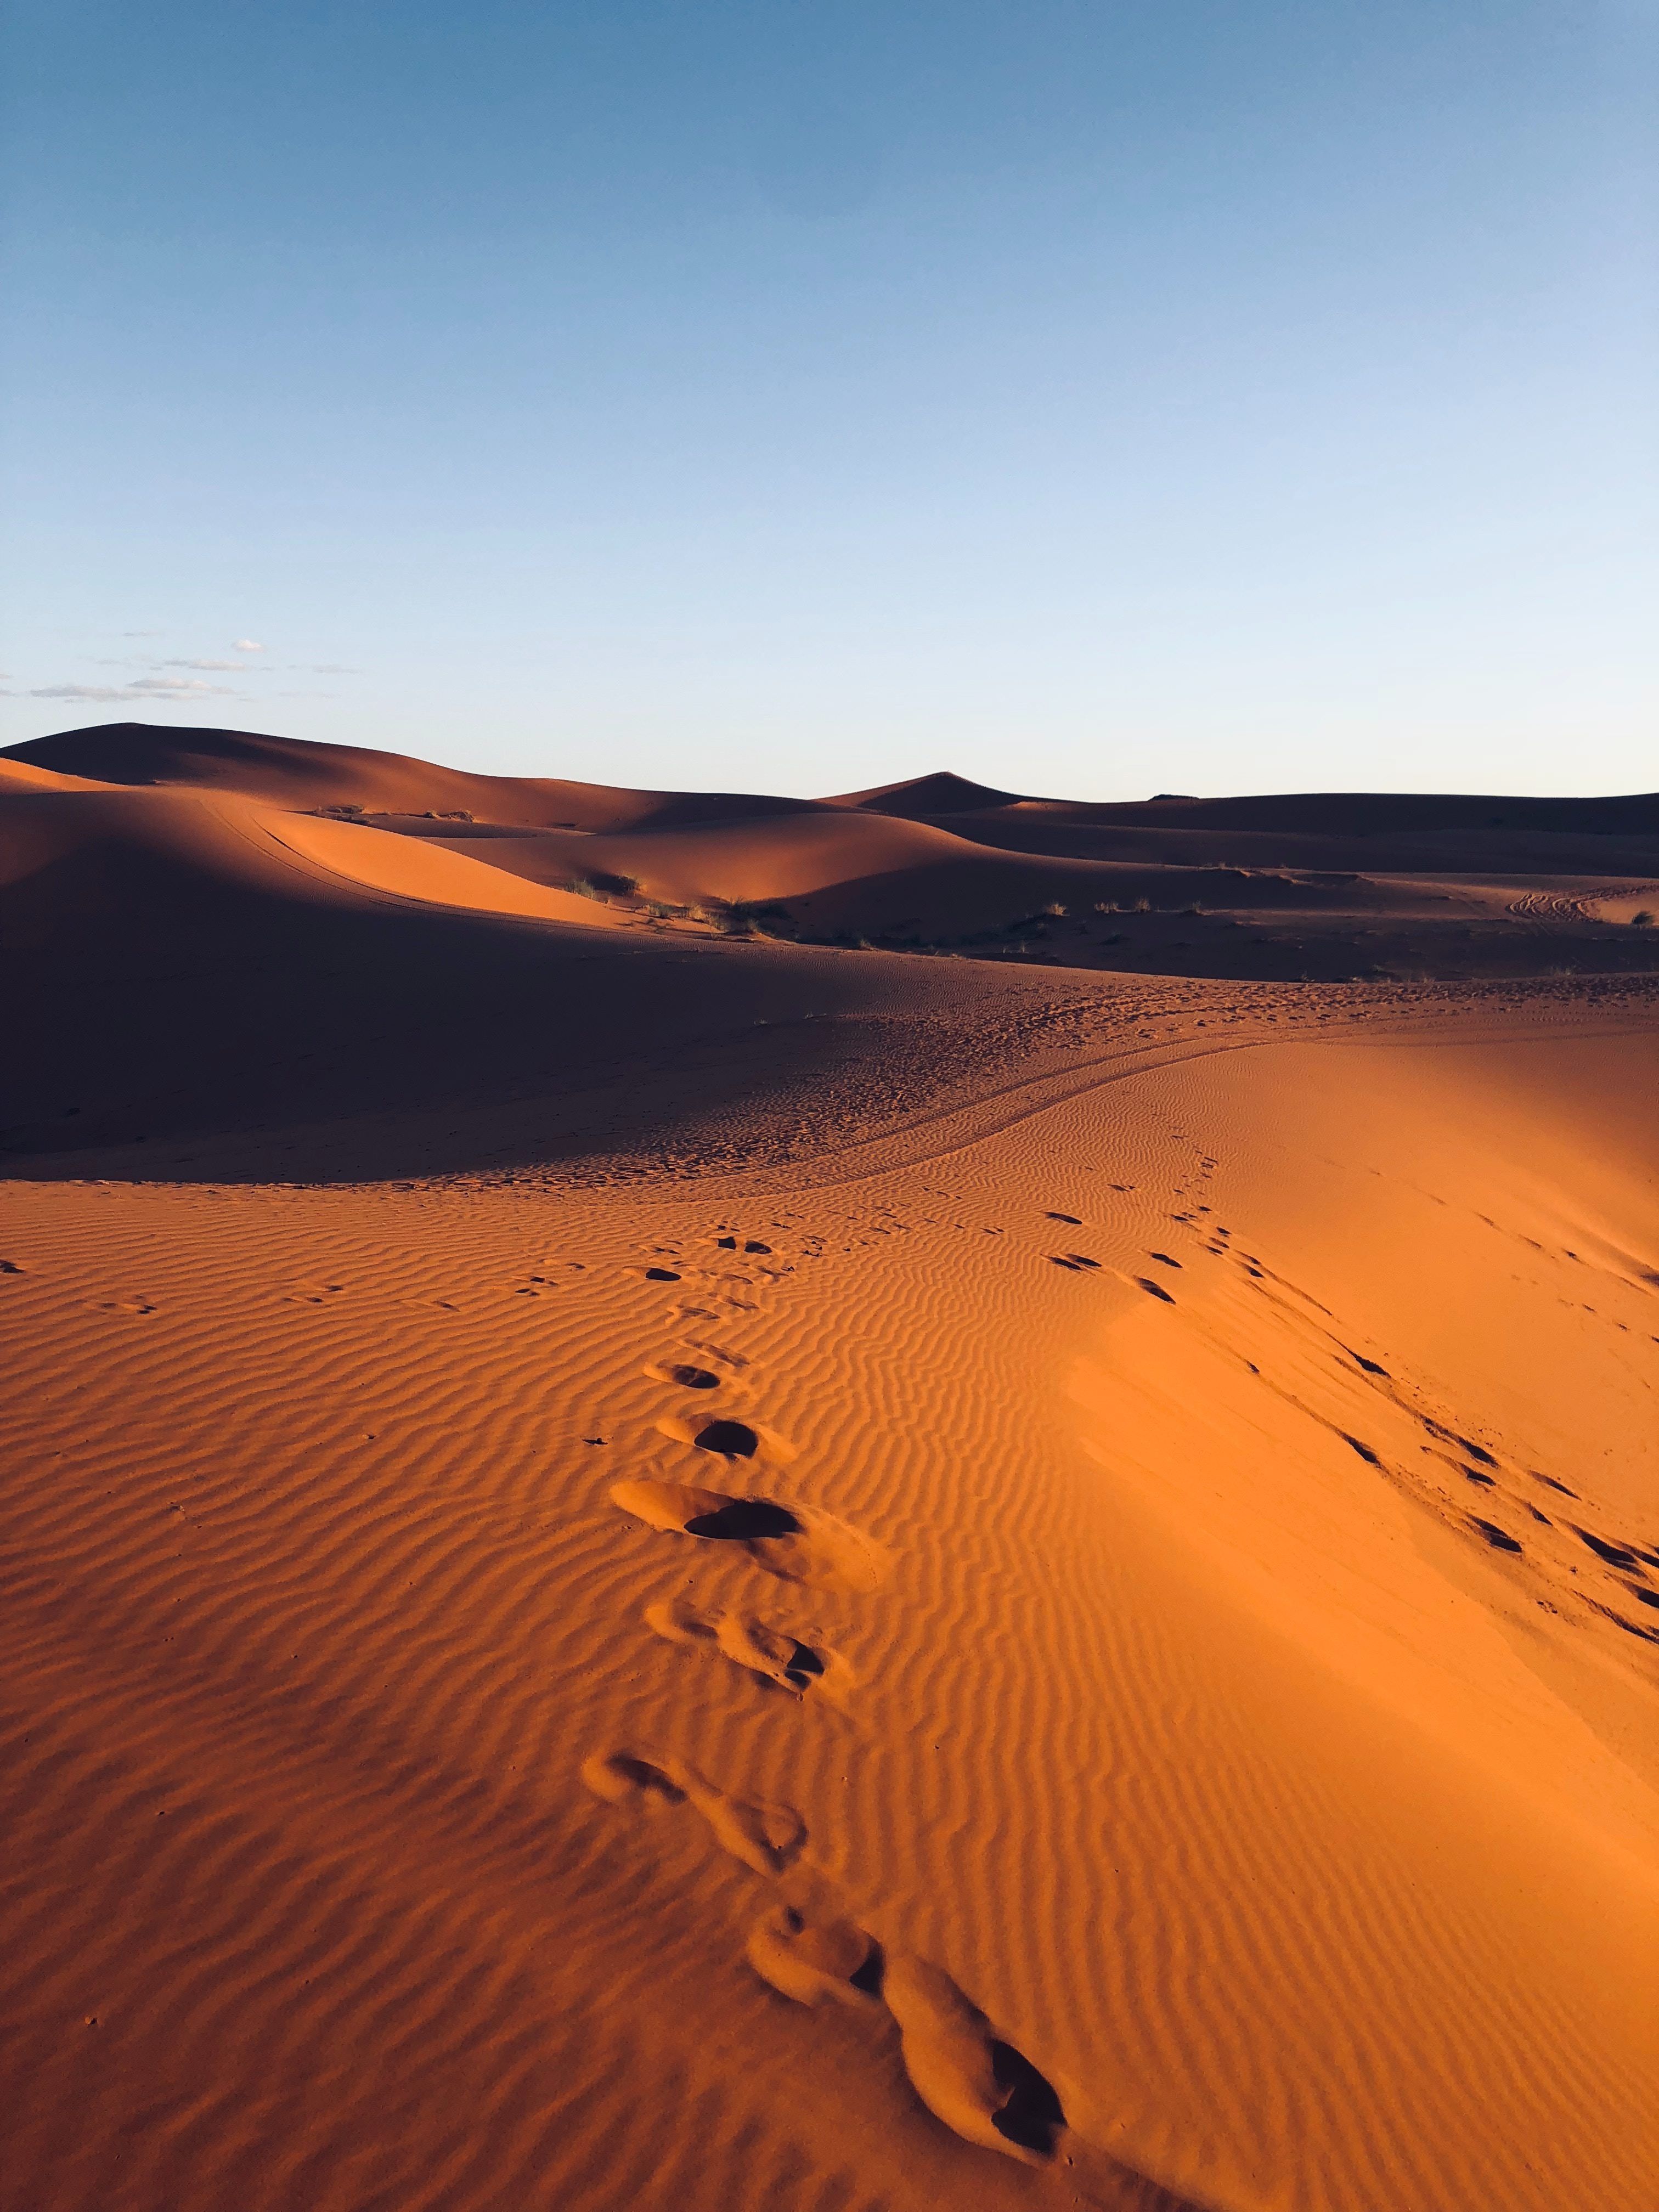 Download 12 Beautiful Desert Wallpaper For iPhone XS, XS Max